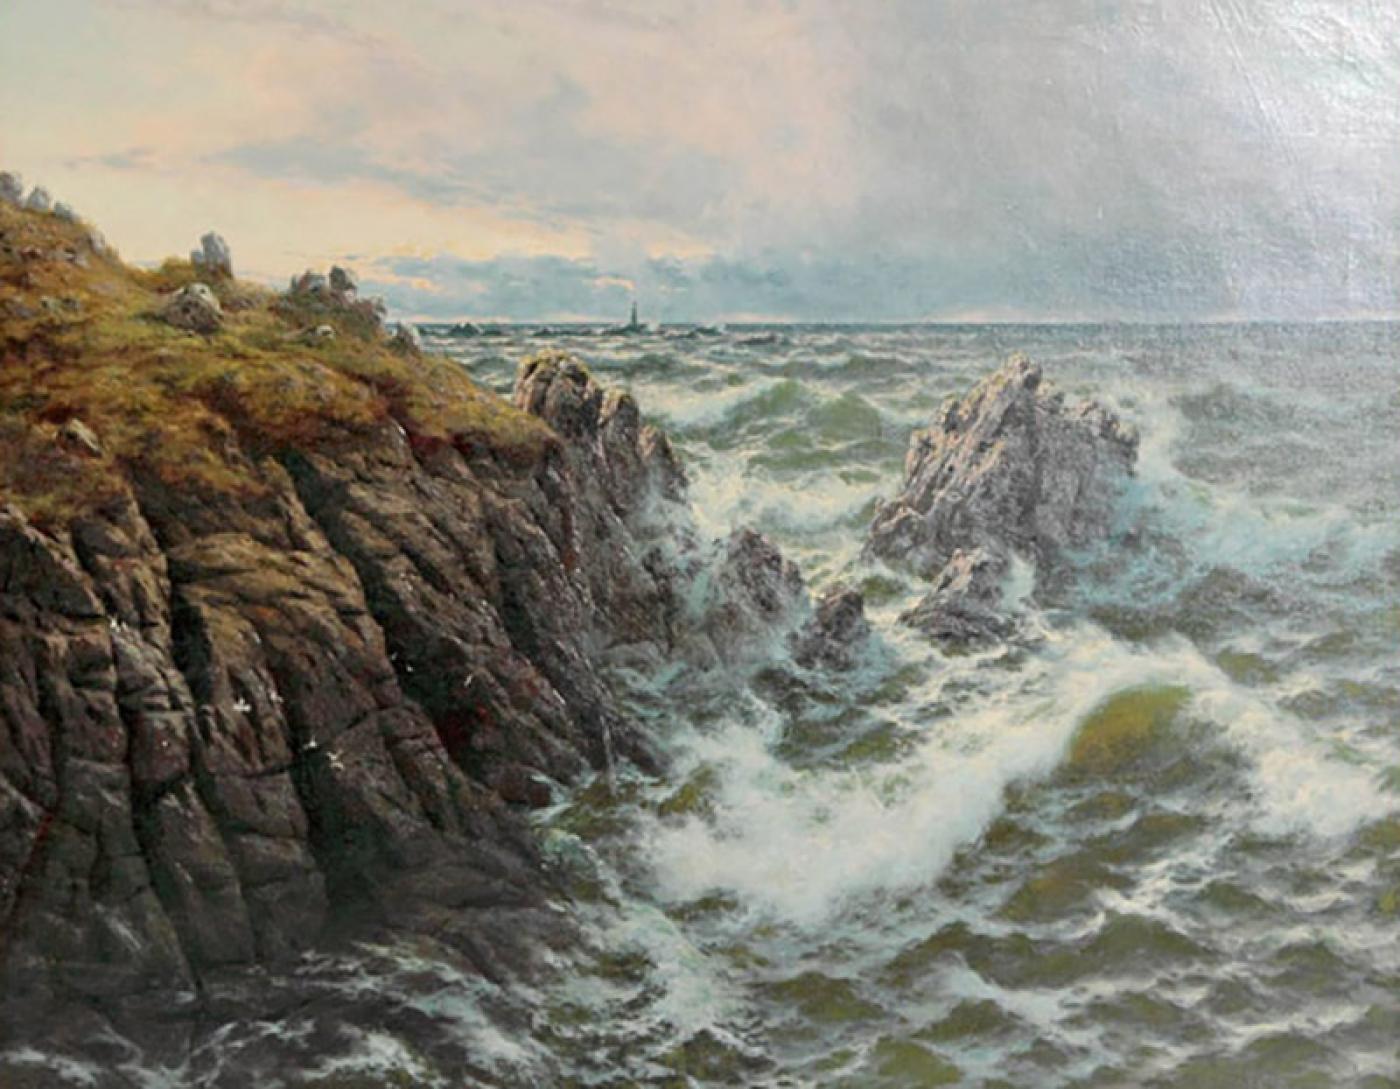 A Rocky Coast by Thomas Rose Miles (English, 1844-1916)